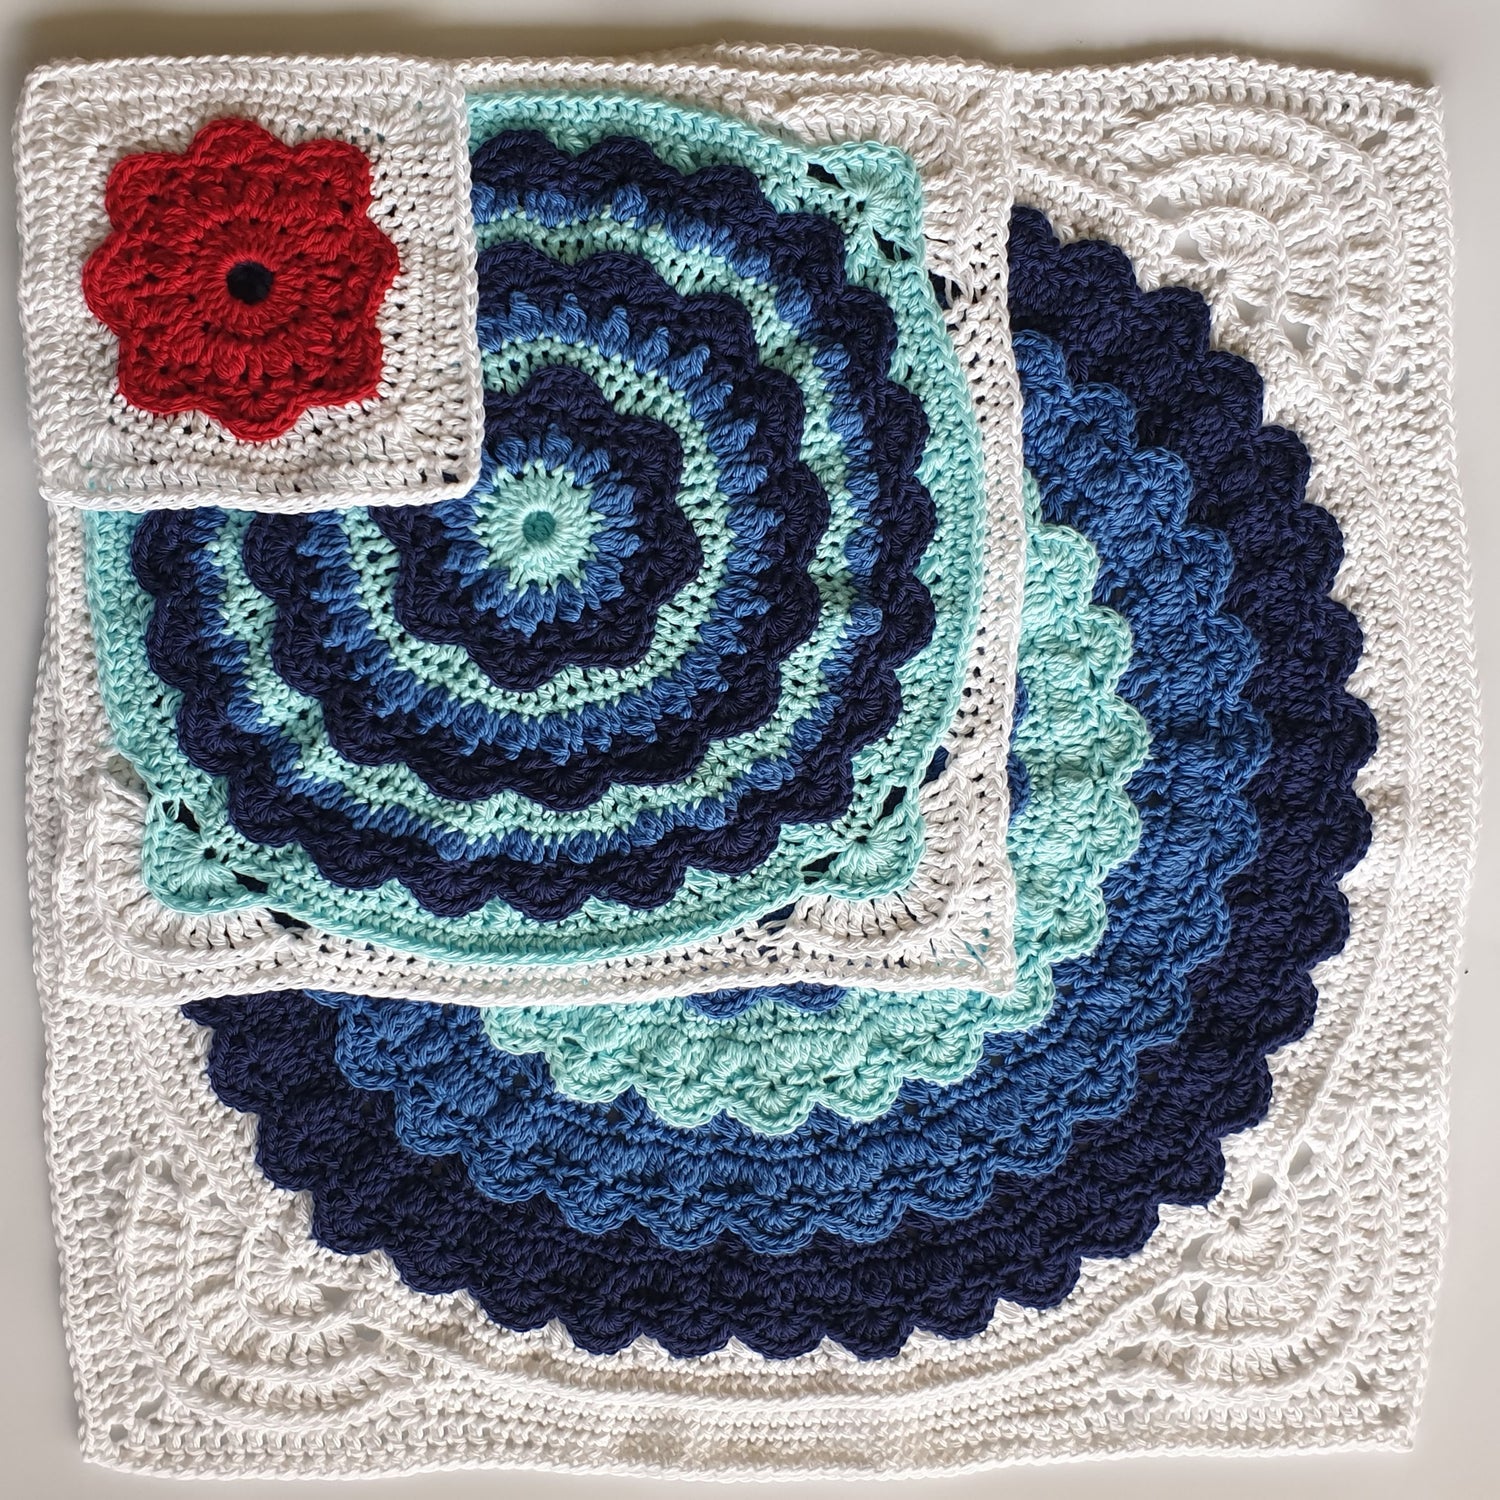 Manderley Crochet Blanket by Shelley Husband